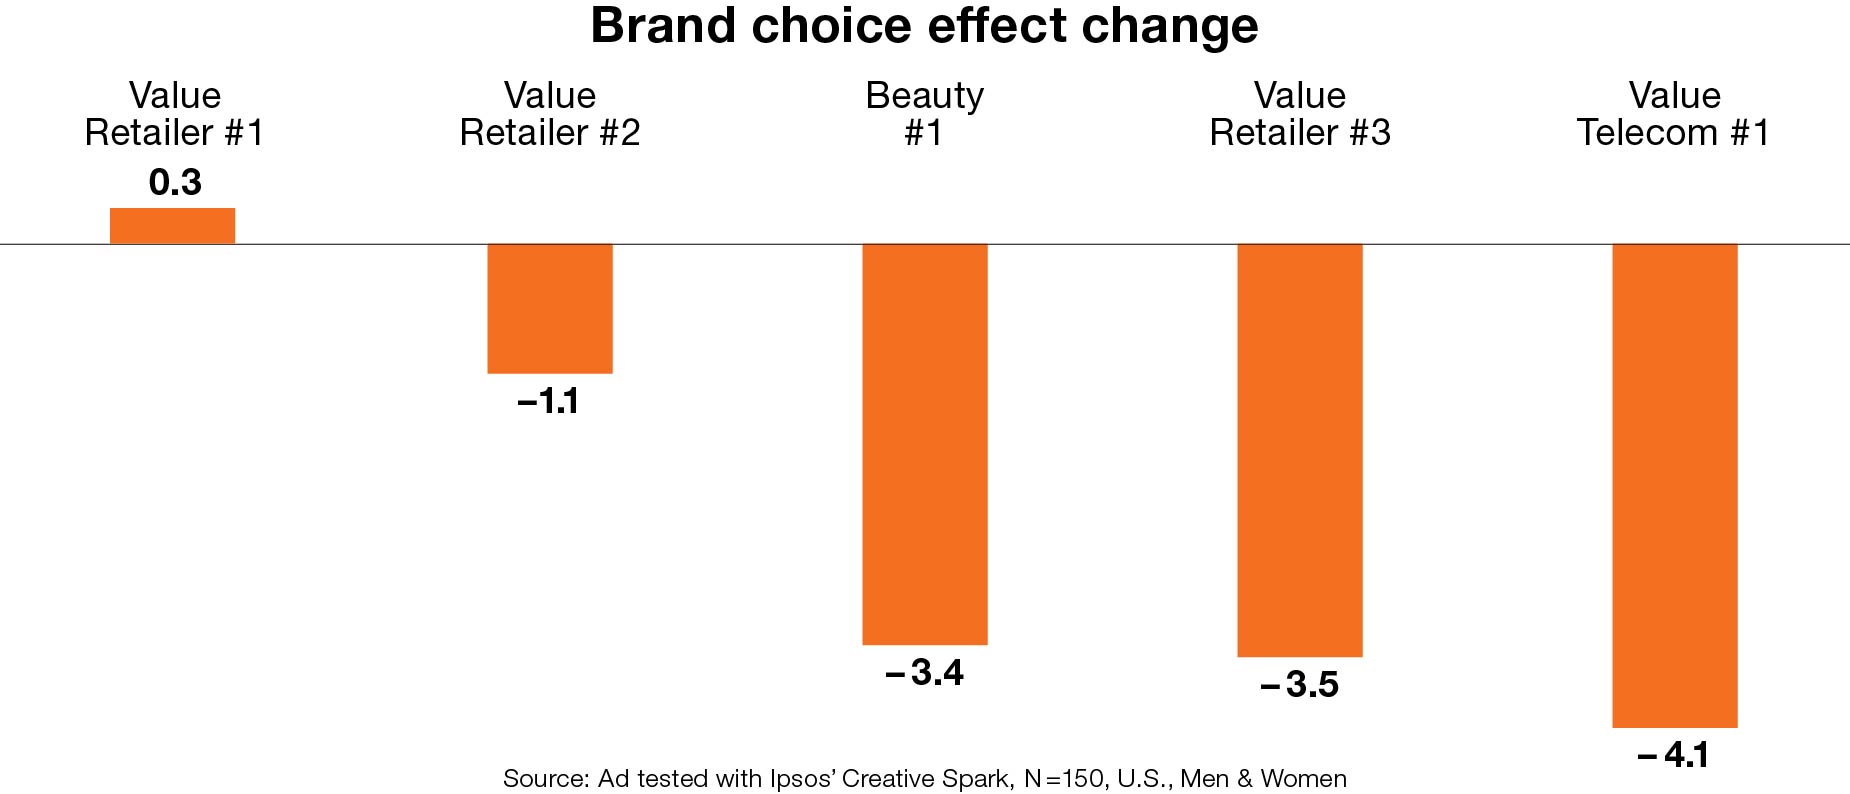 Brand choice effects change